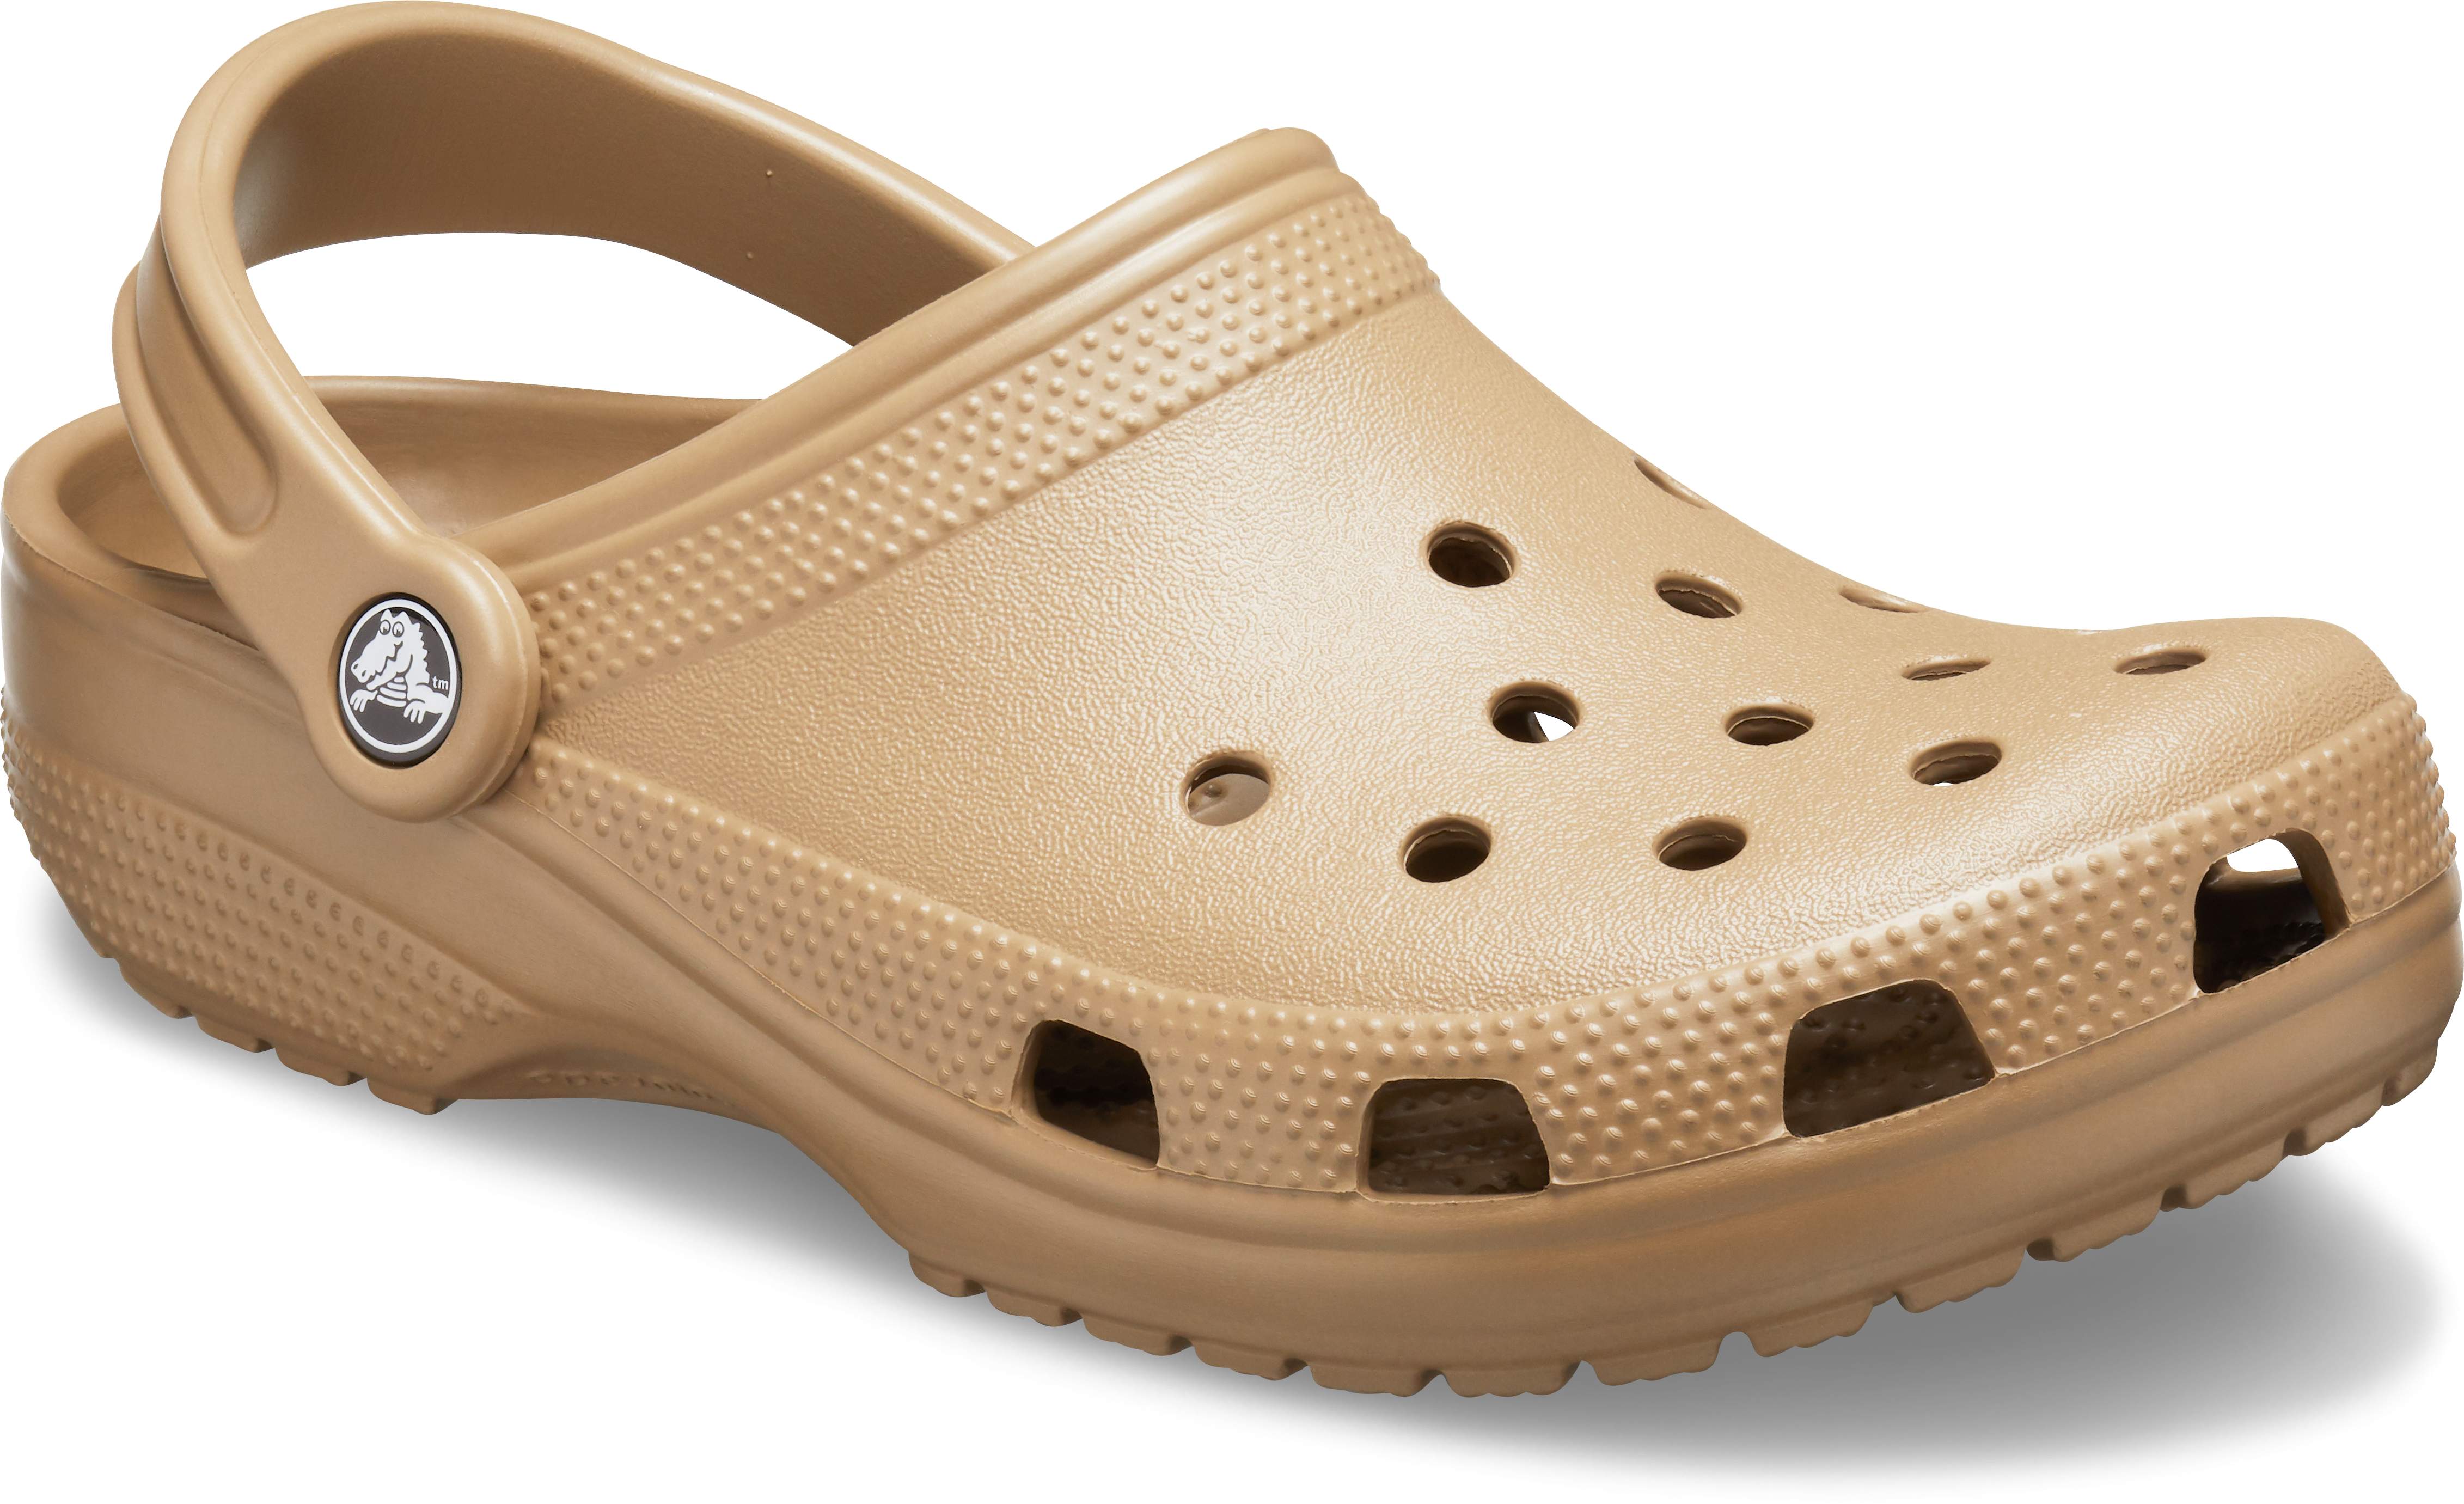 is crocs good